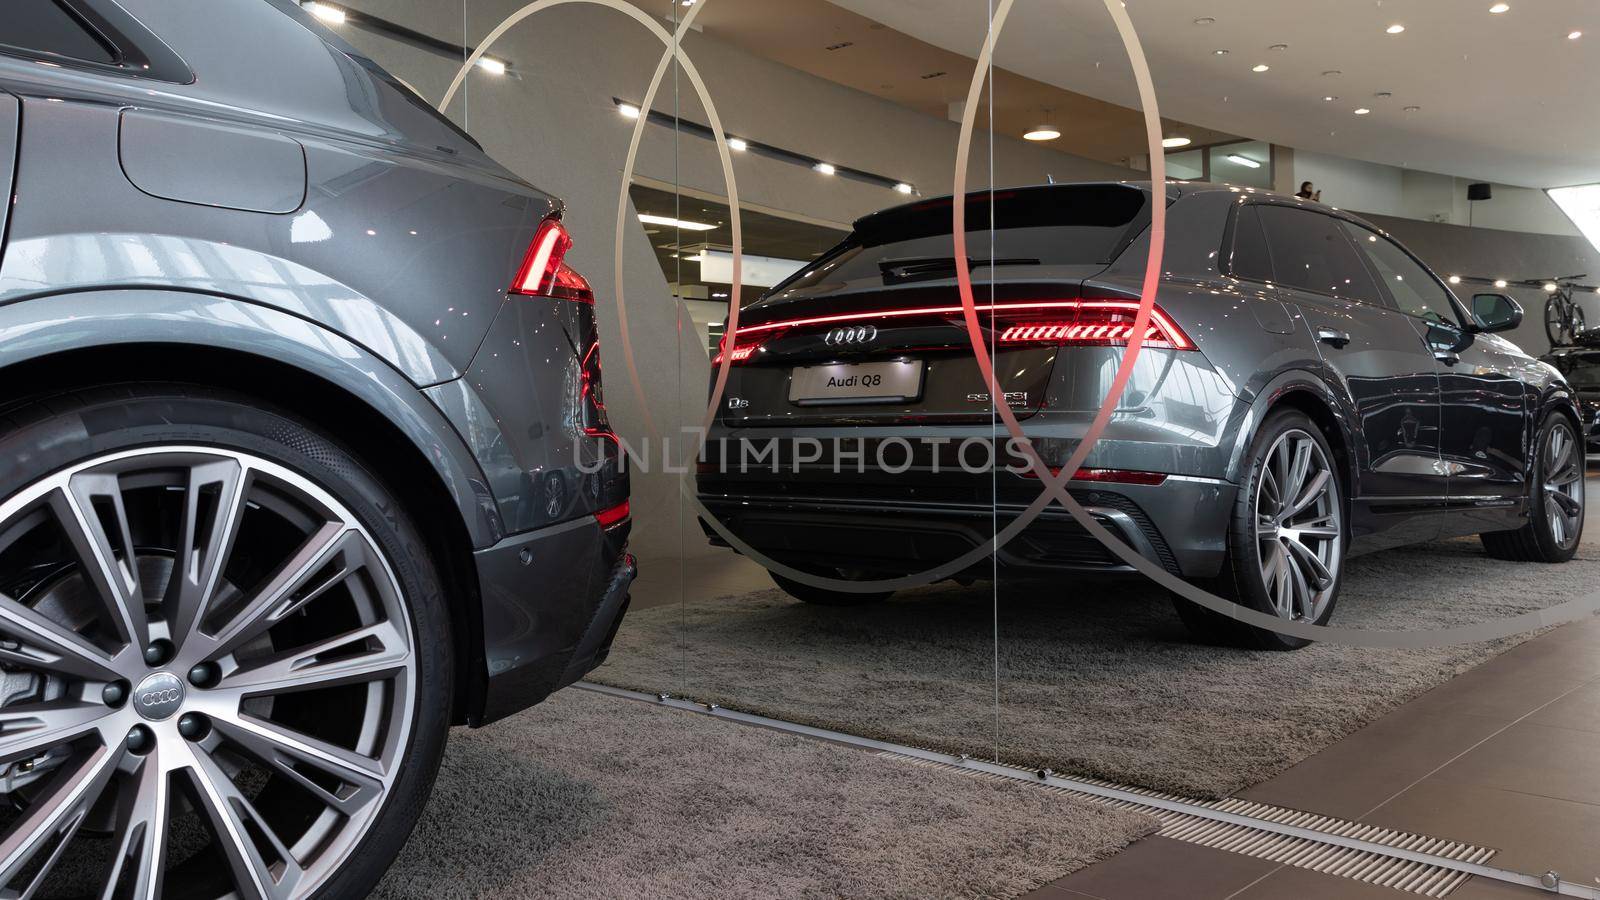 Audi car center new model q8, reflection view.